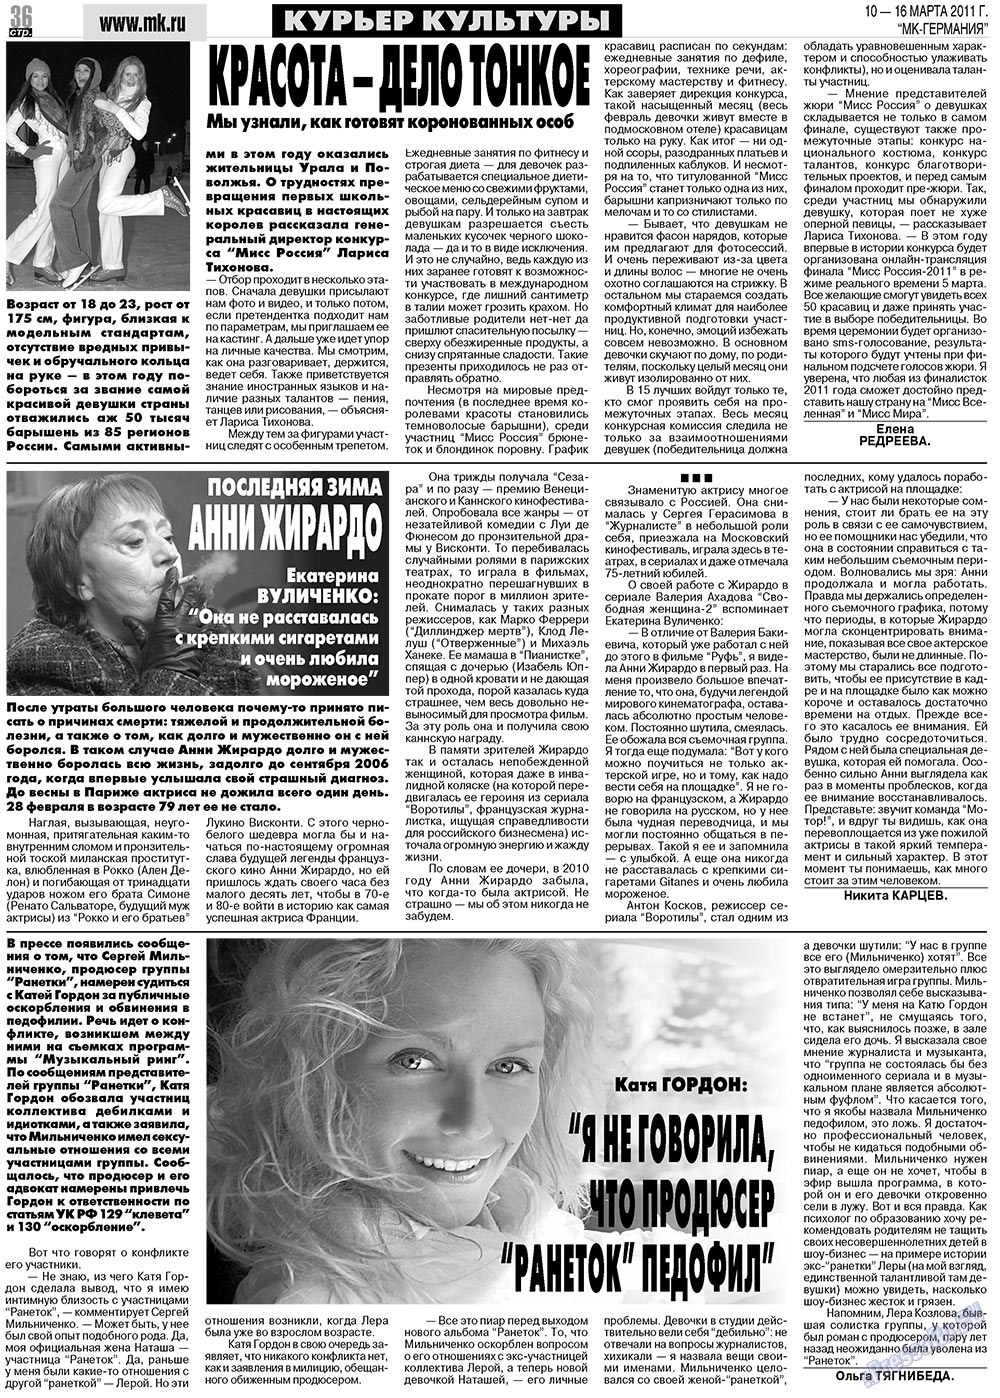 МК-Германия, газета. 2011 №10 стр.36